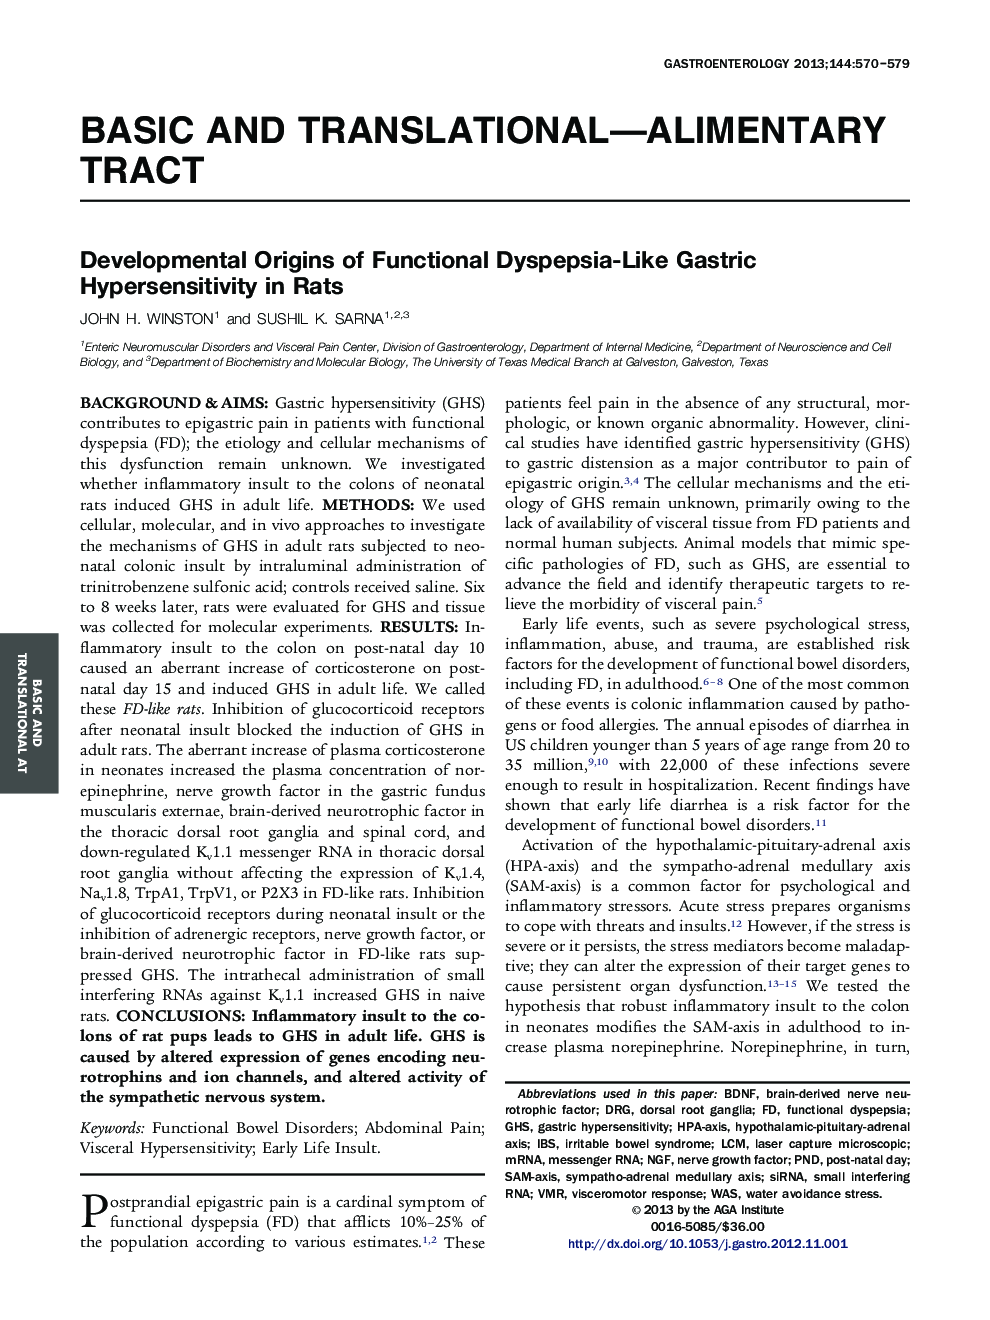 Developmental Origins of Functional Dyspepsia-Like Gastric Hypersensitivity in Rats